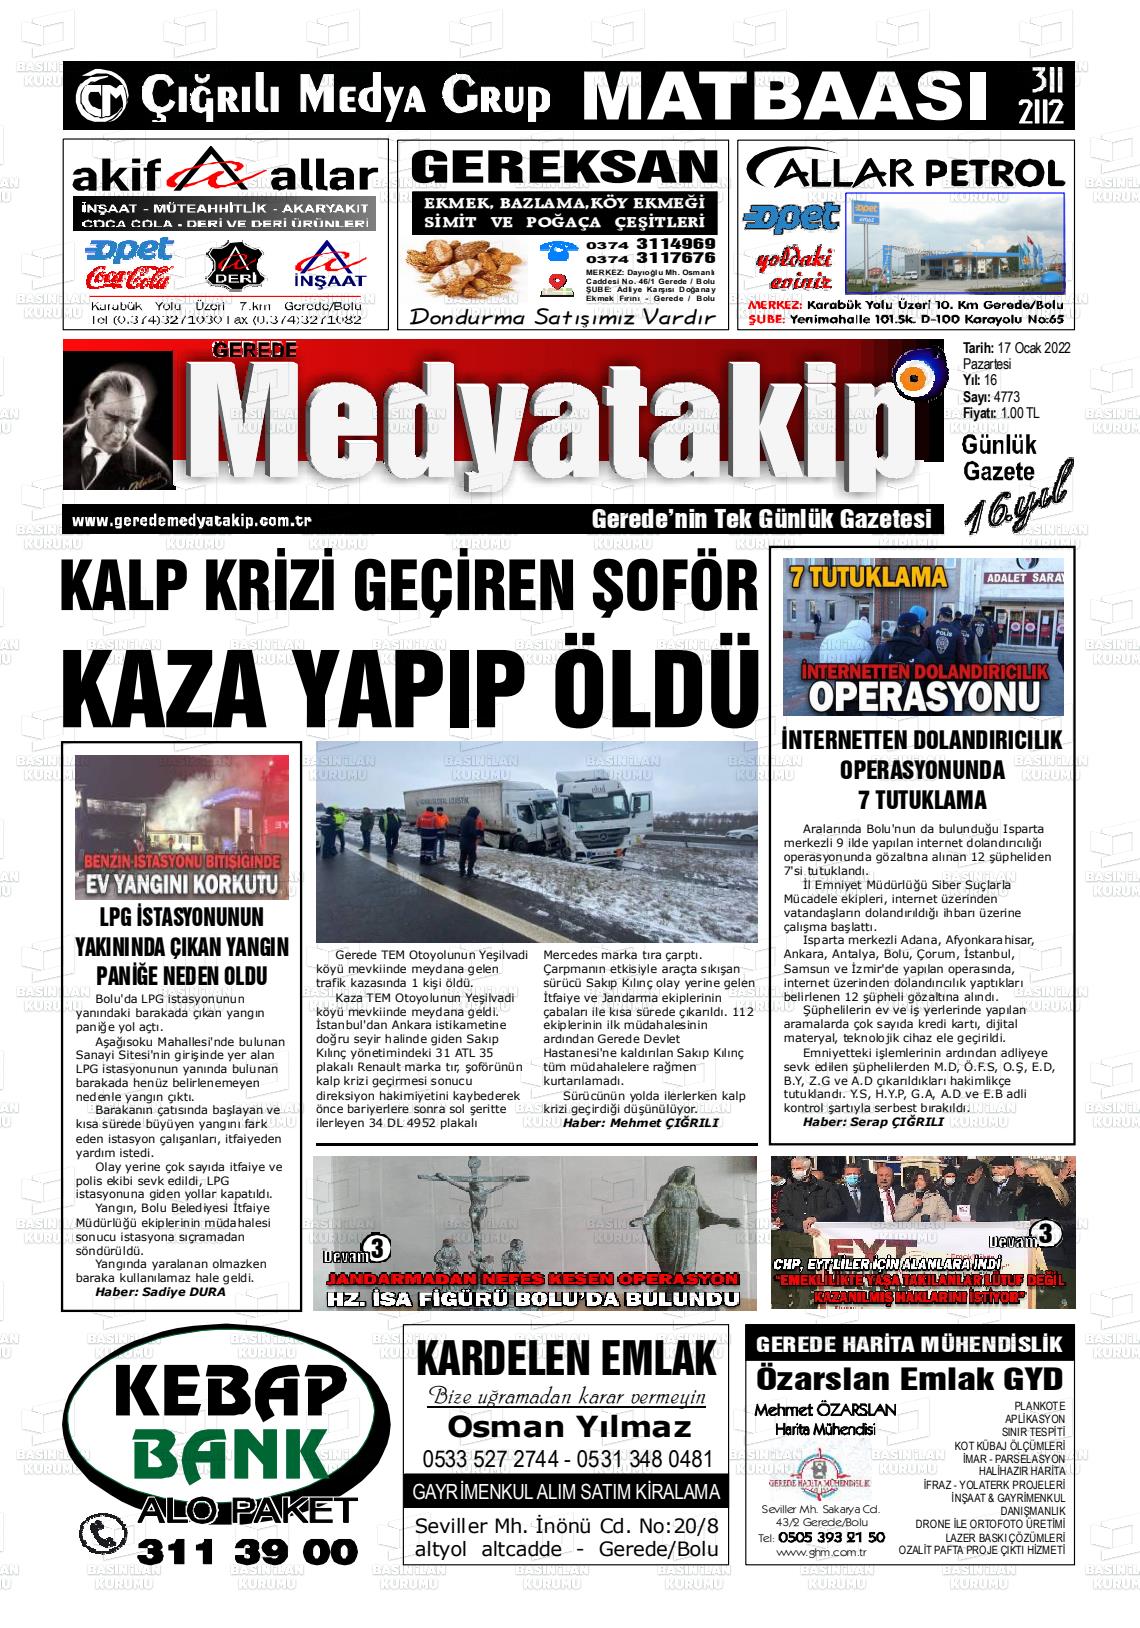 17 Ocak 2022 Gerede Medya Takip Gazete Manşeti